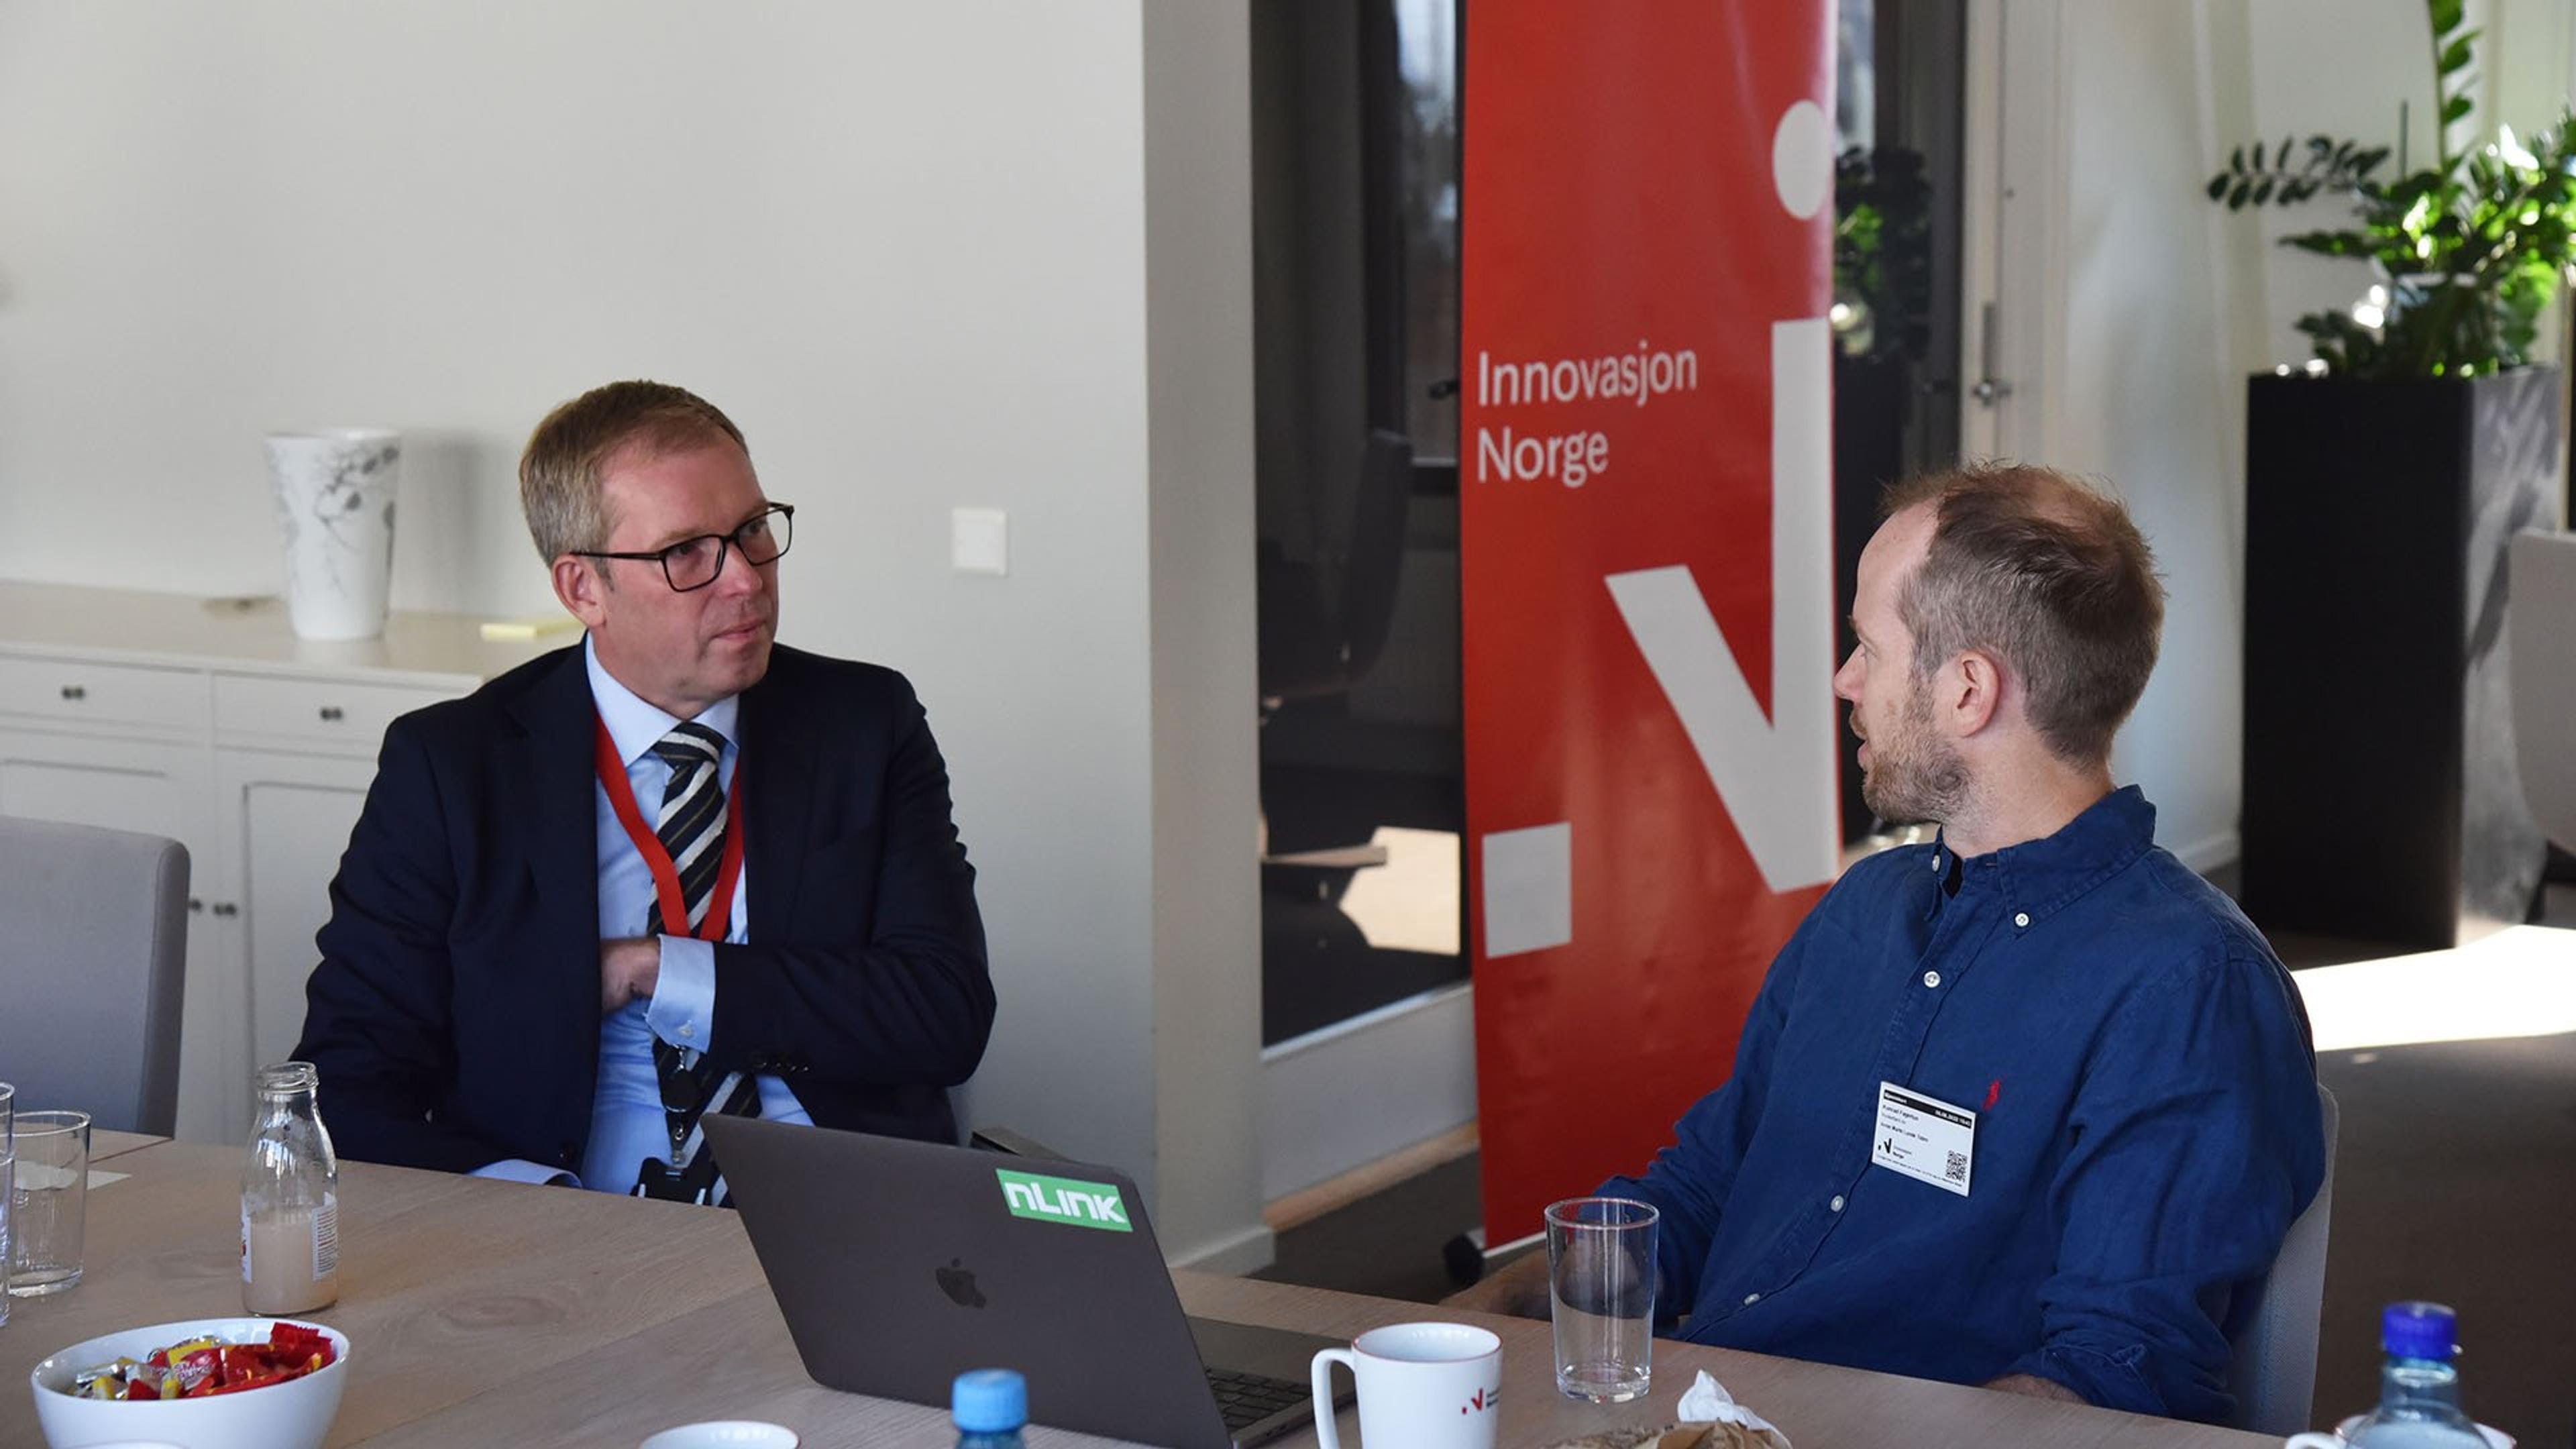 Innovation Norway CEO Håkon Haugli in talks with Rocketfarm entrepreneur